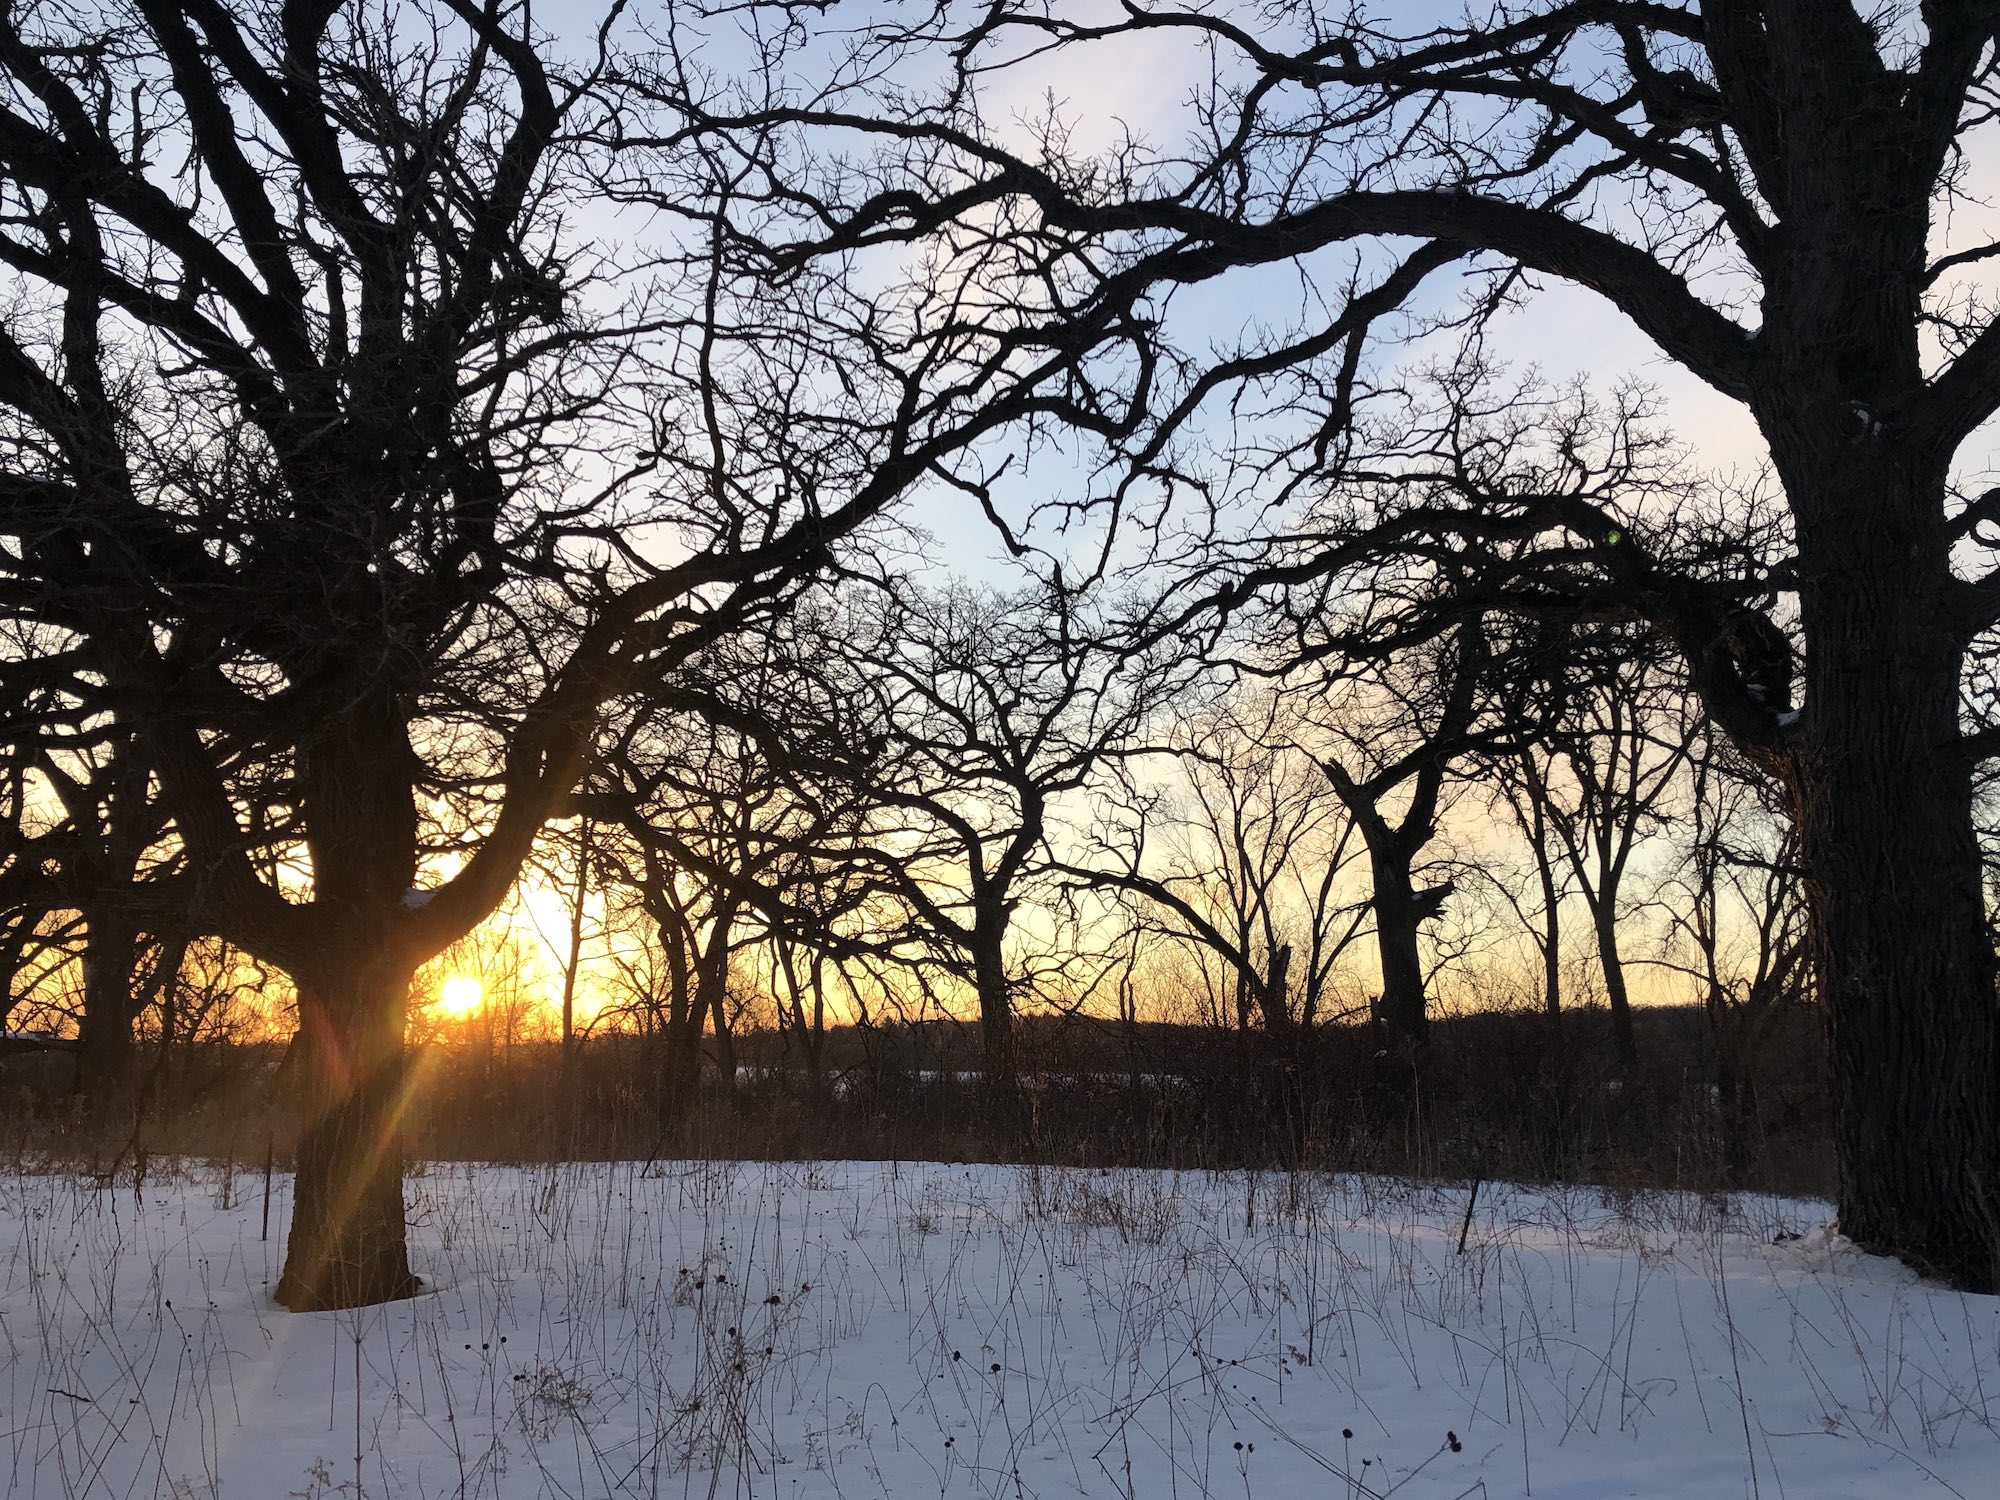 Oak Savanna on February 25, 2019 in University of Wisconsin Arboretum in Madison, Wisconsin on the north shore of Lake Wingra.